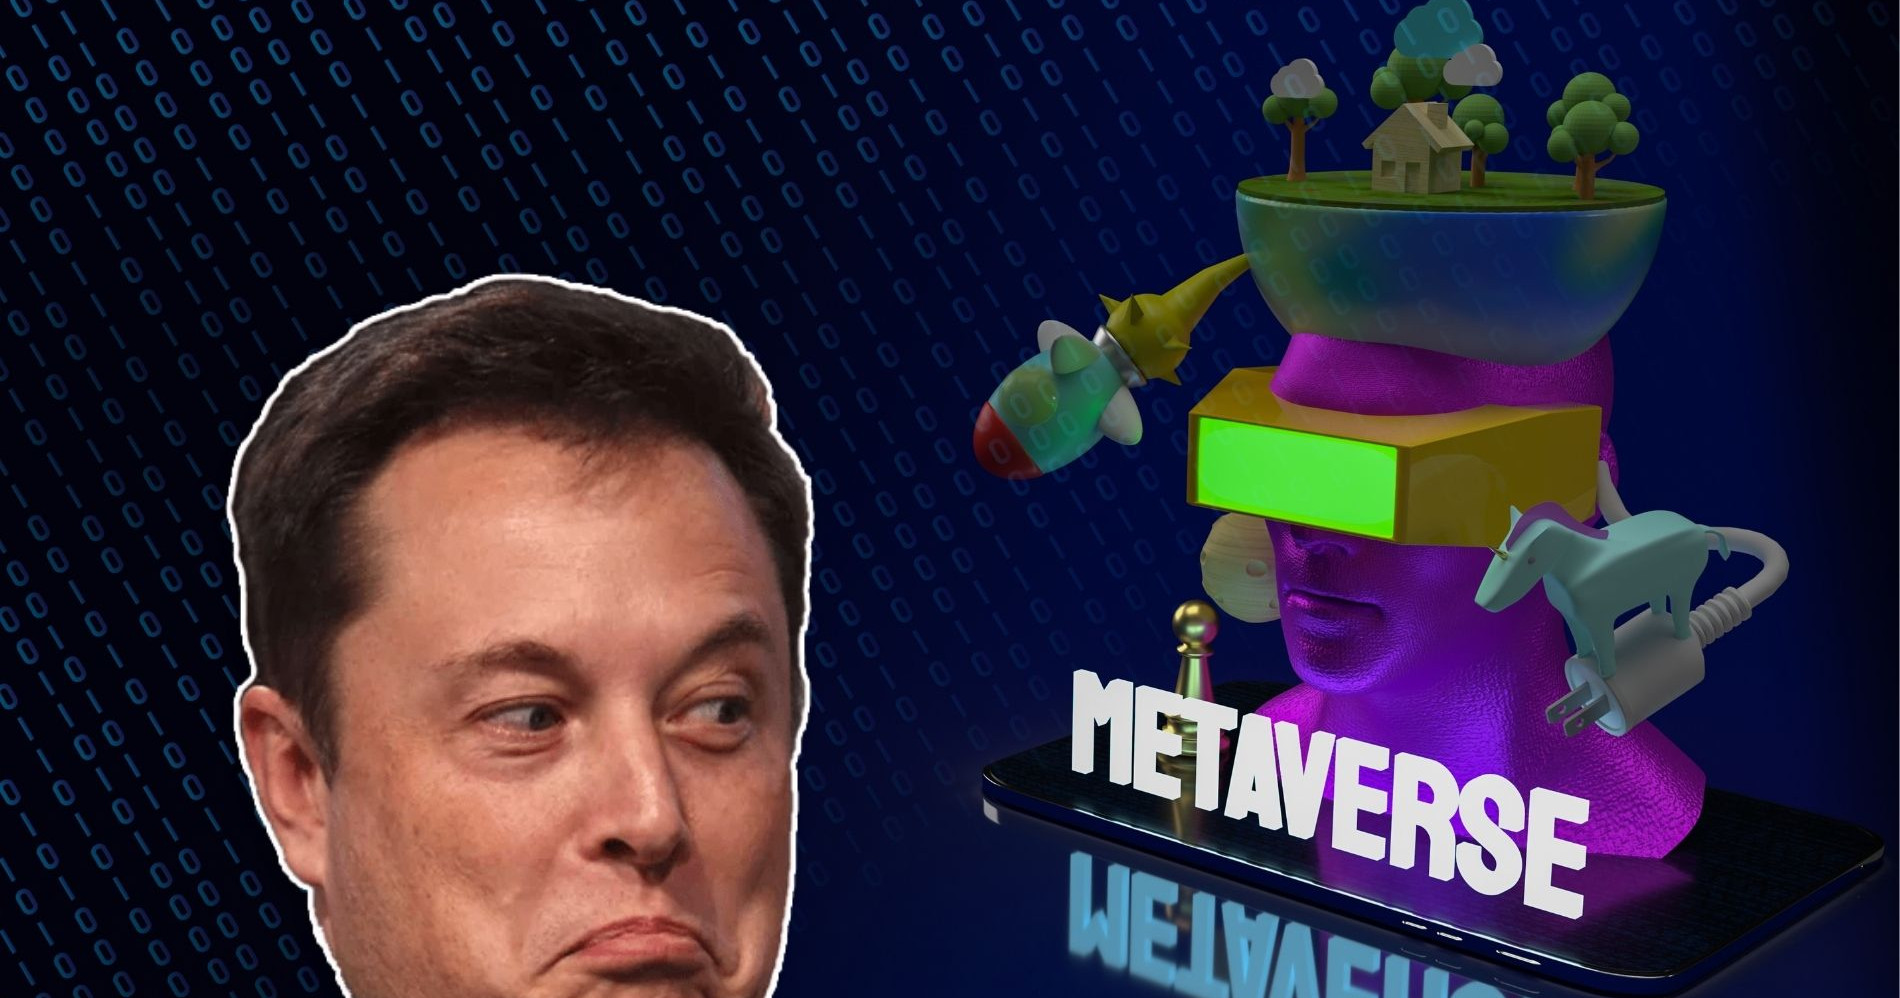 Alasan Elon Musk Enggak Tertarik sama Metaverse dan Web3 Illustration Bisnis Muda - Image: Canva